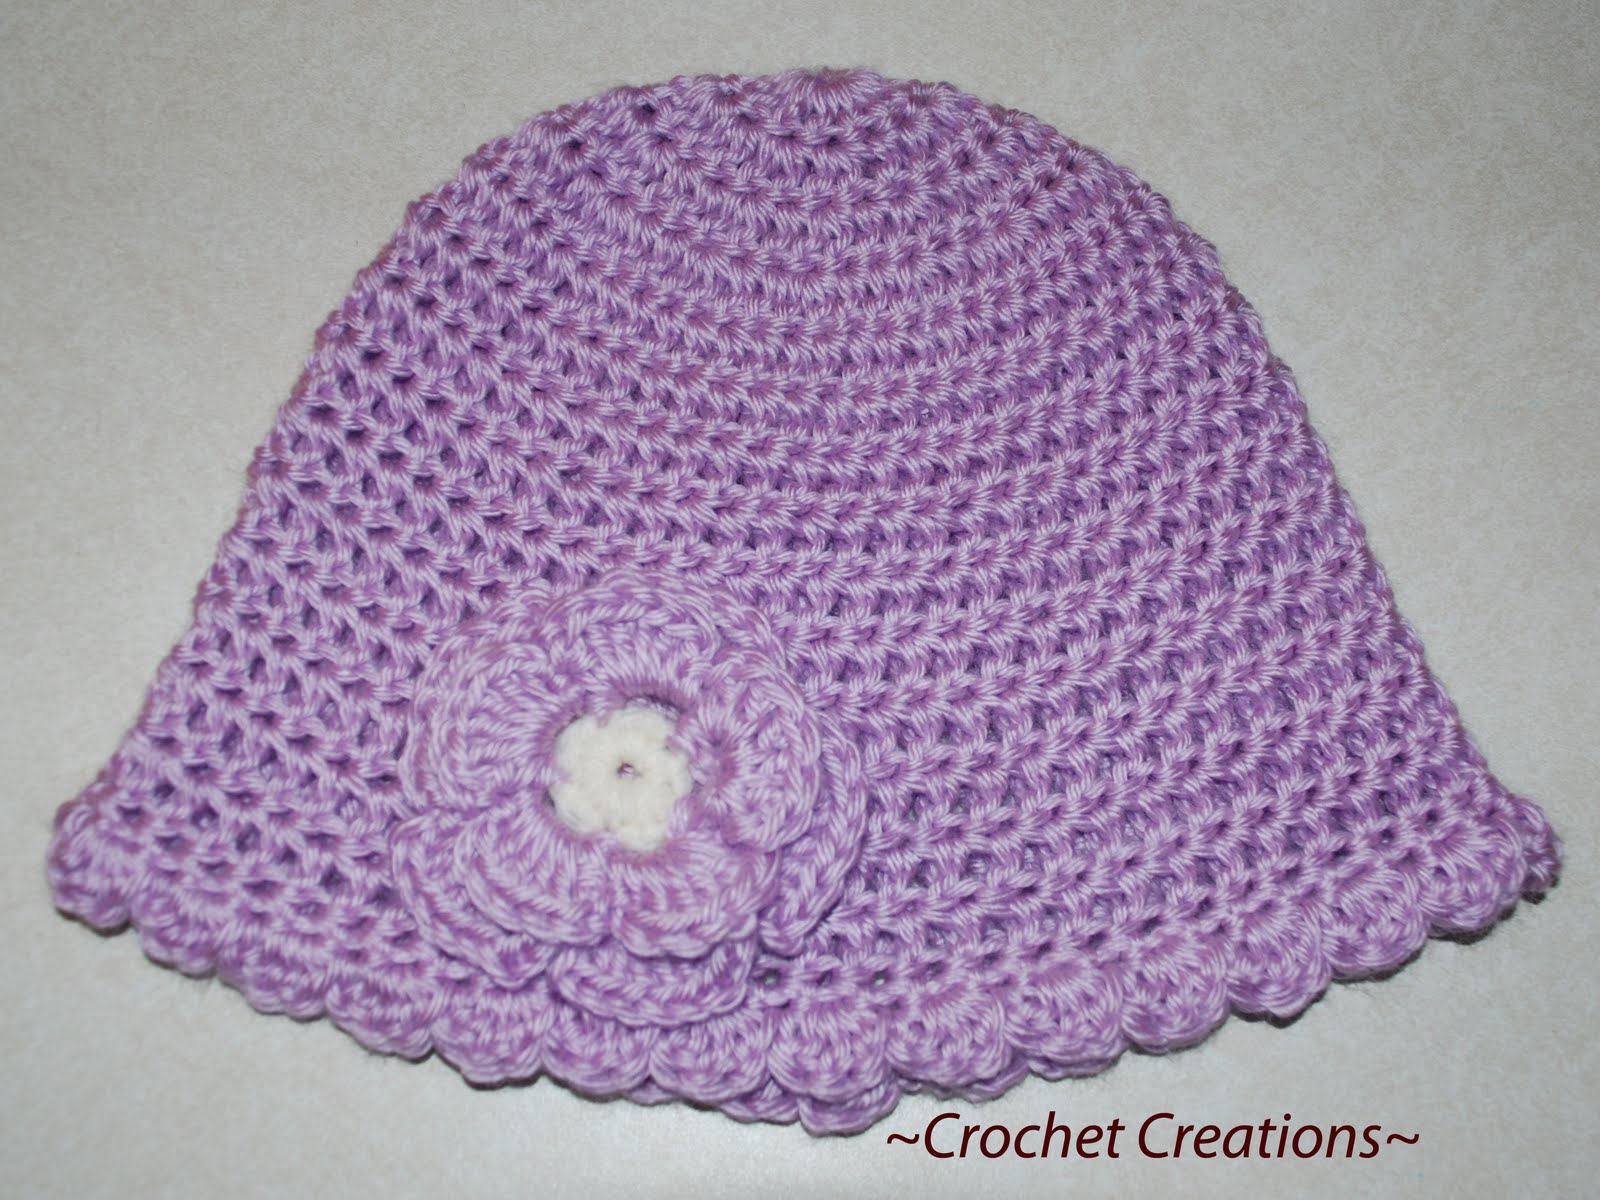 Crochet Children&apos;s Hat with Flower - Crochet Creative Creations